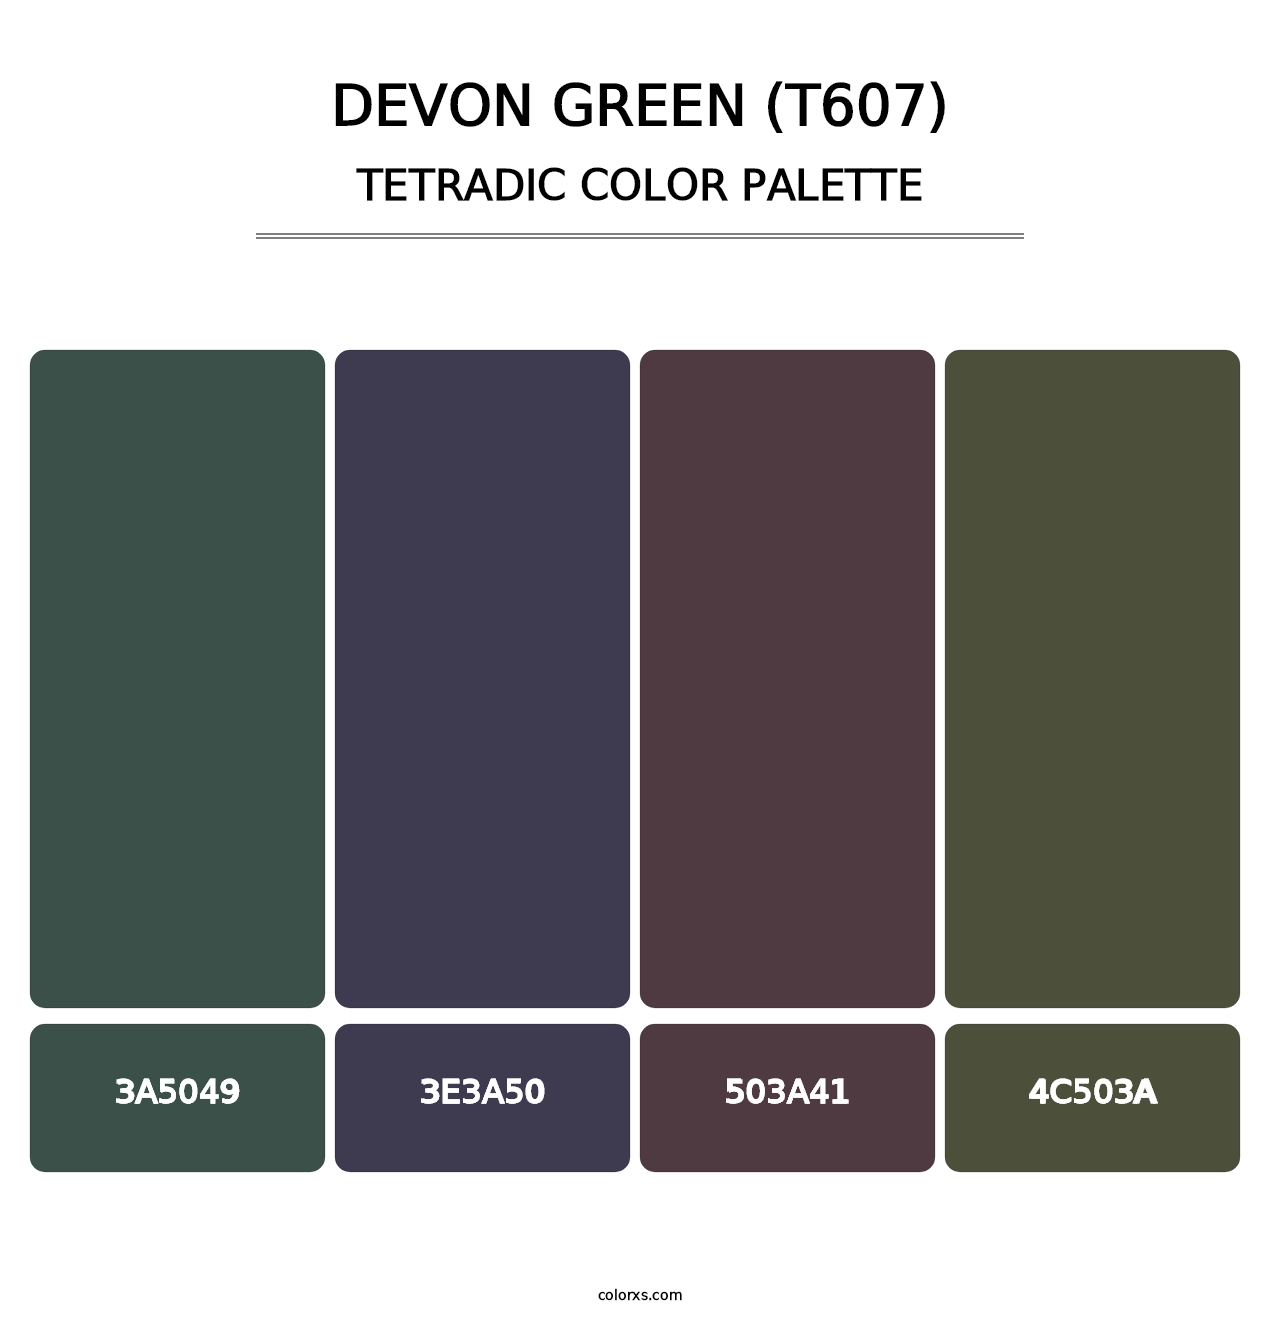 Devon Green (T607) - Tetradic Color Palette